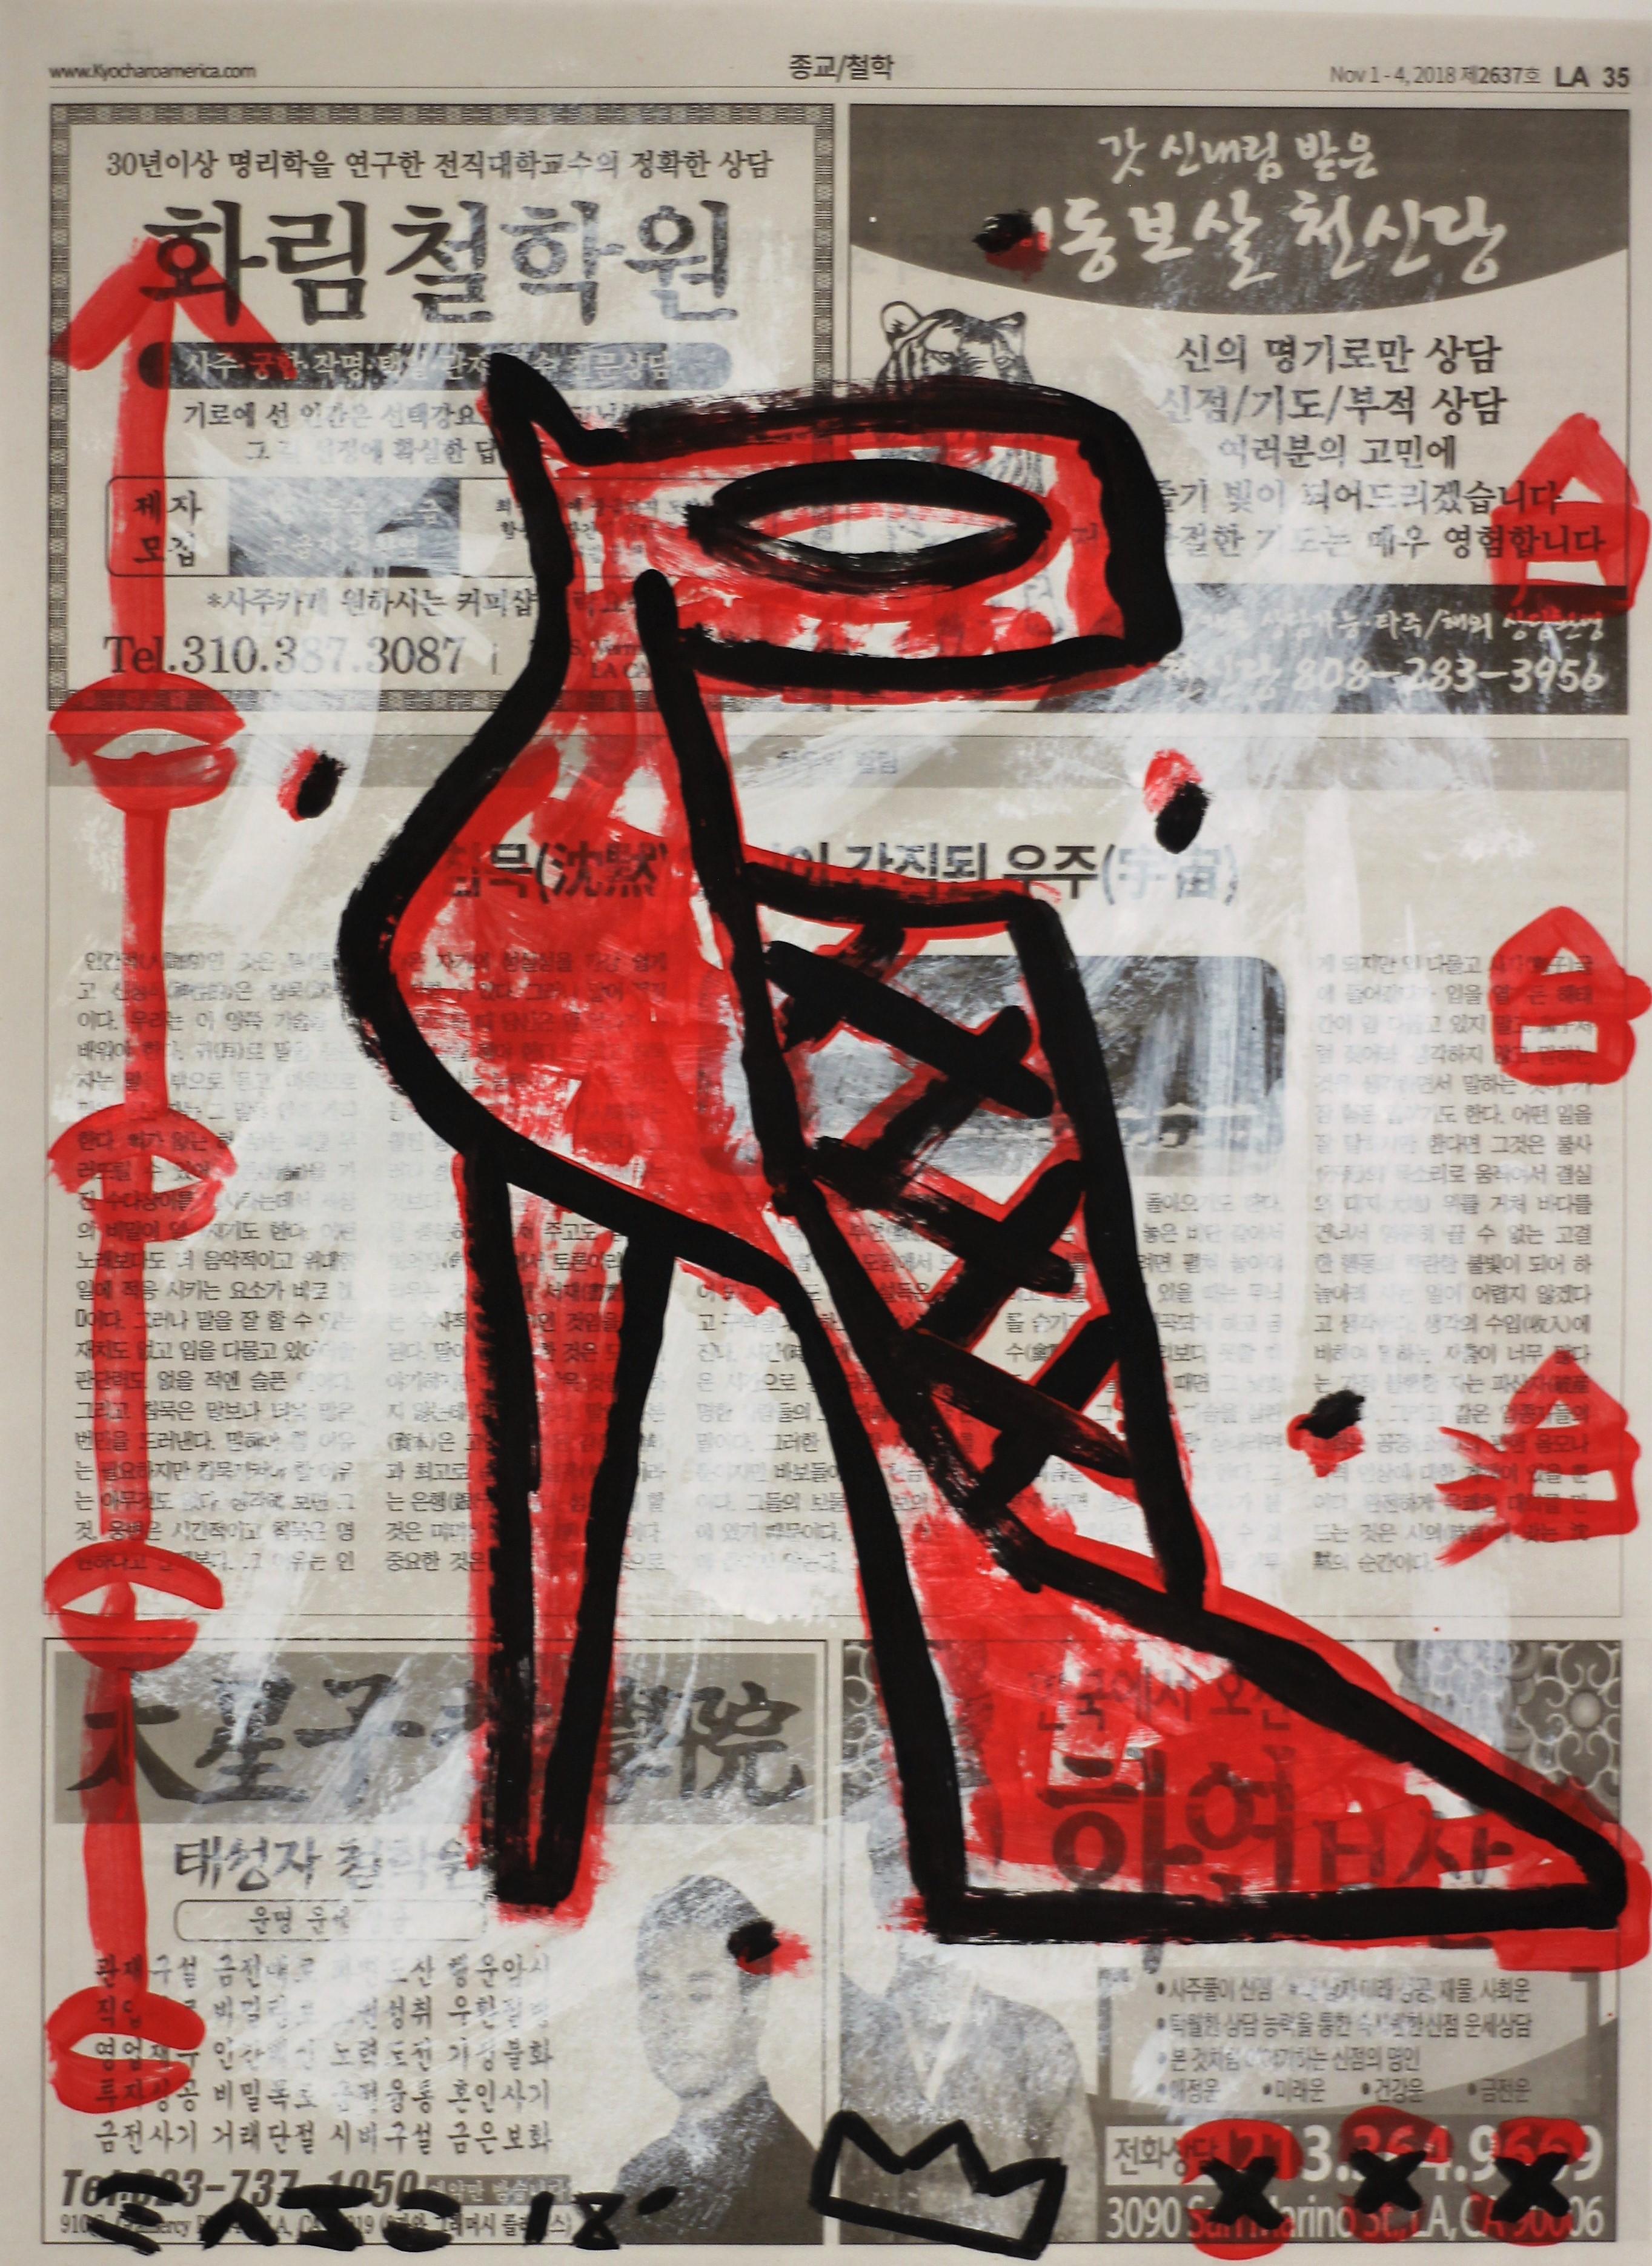 My Dream Shoe - Black and Red Stiletto Original Street Art on Newsprint